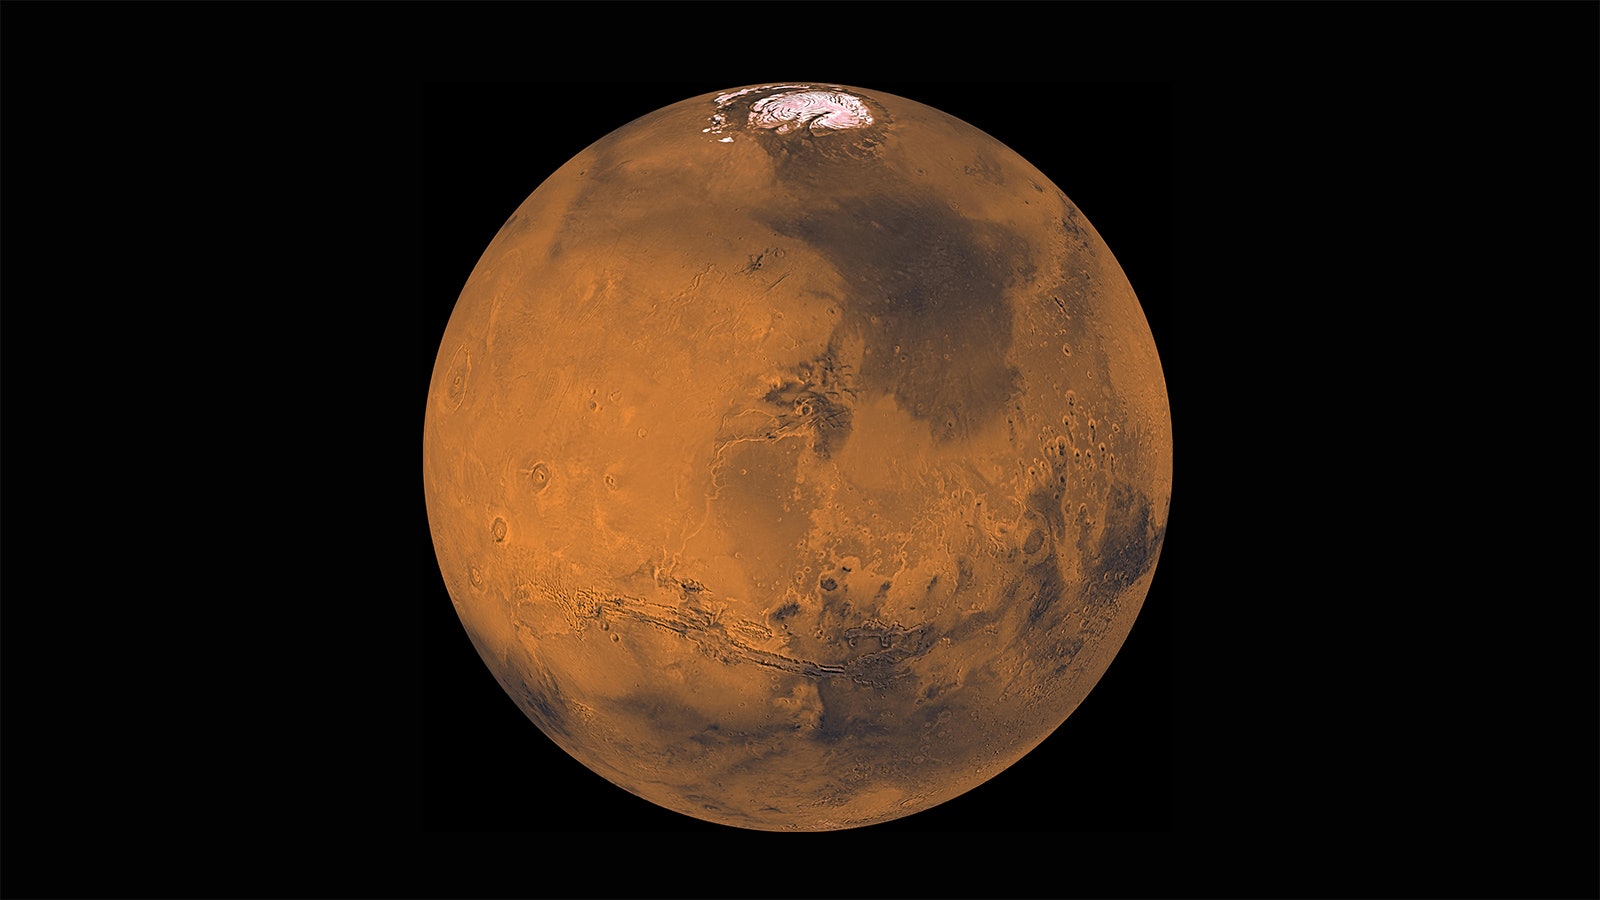 Mars 2020 Remarkable Maps Are Guiding The Mission Icoreign Com - daca dai sub te fut in p cu mata aia curv roblox